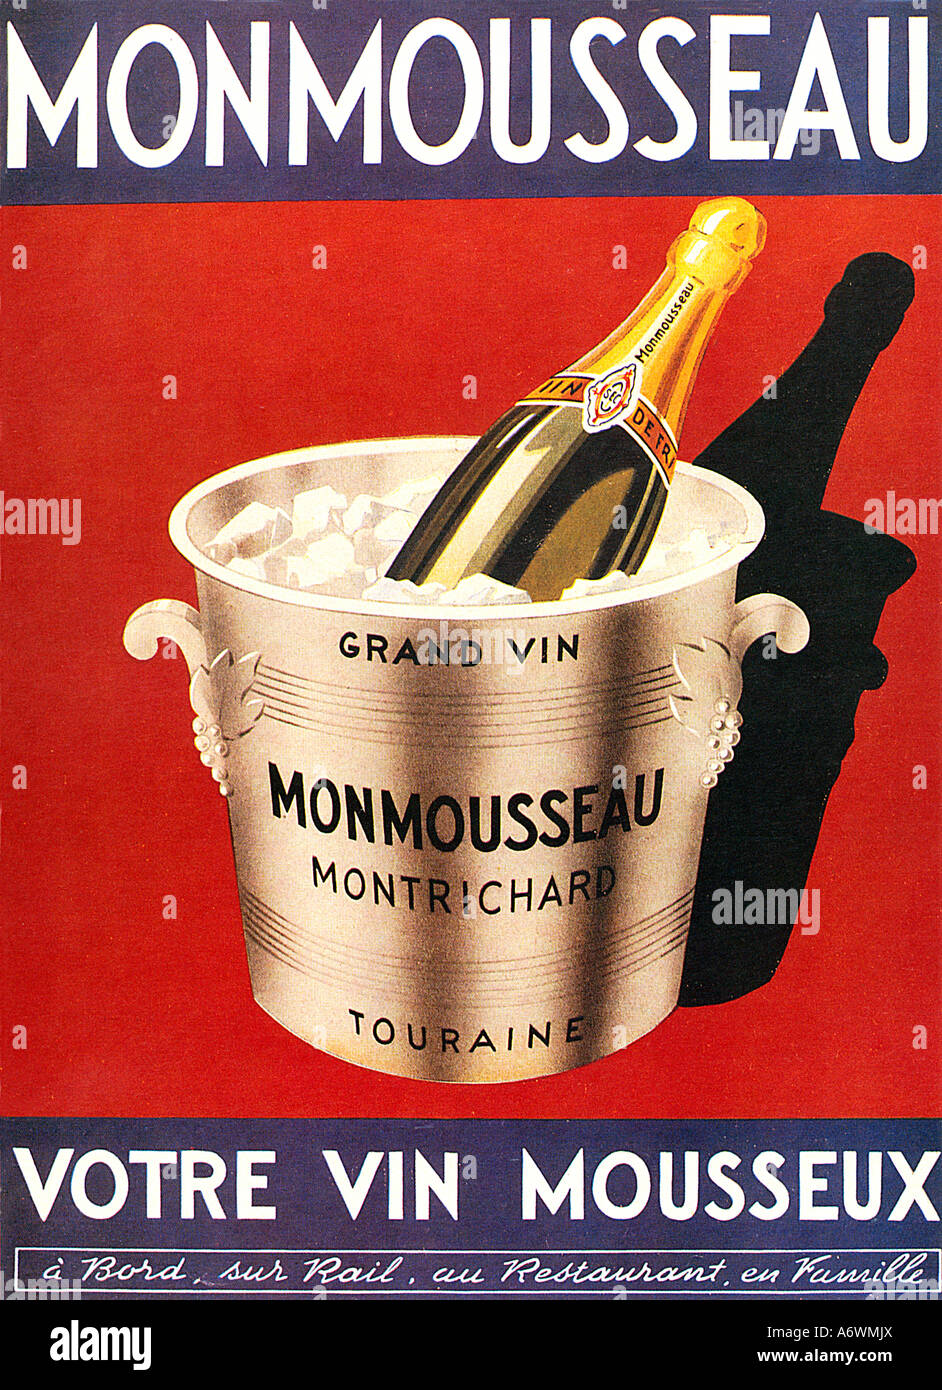 Monmousseau 1940 cartel para el vino espumoso francés del Loira producidos por la méthode champenois Foto de stock